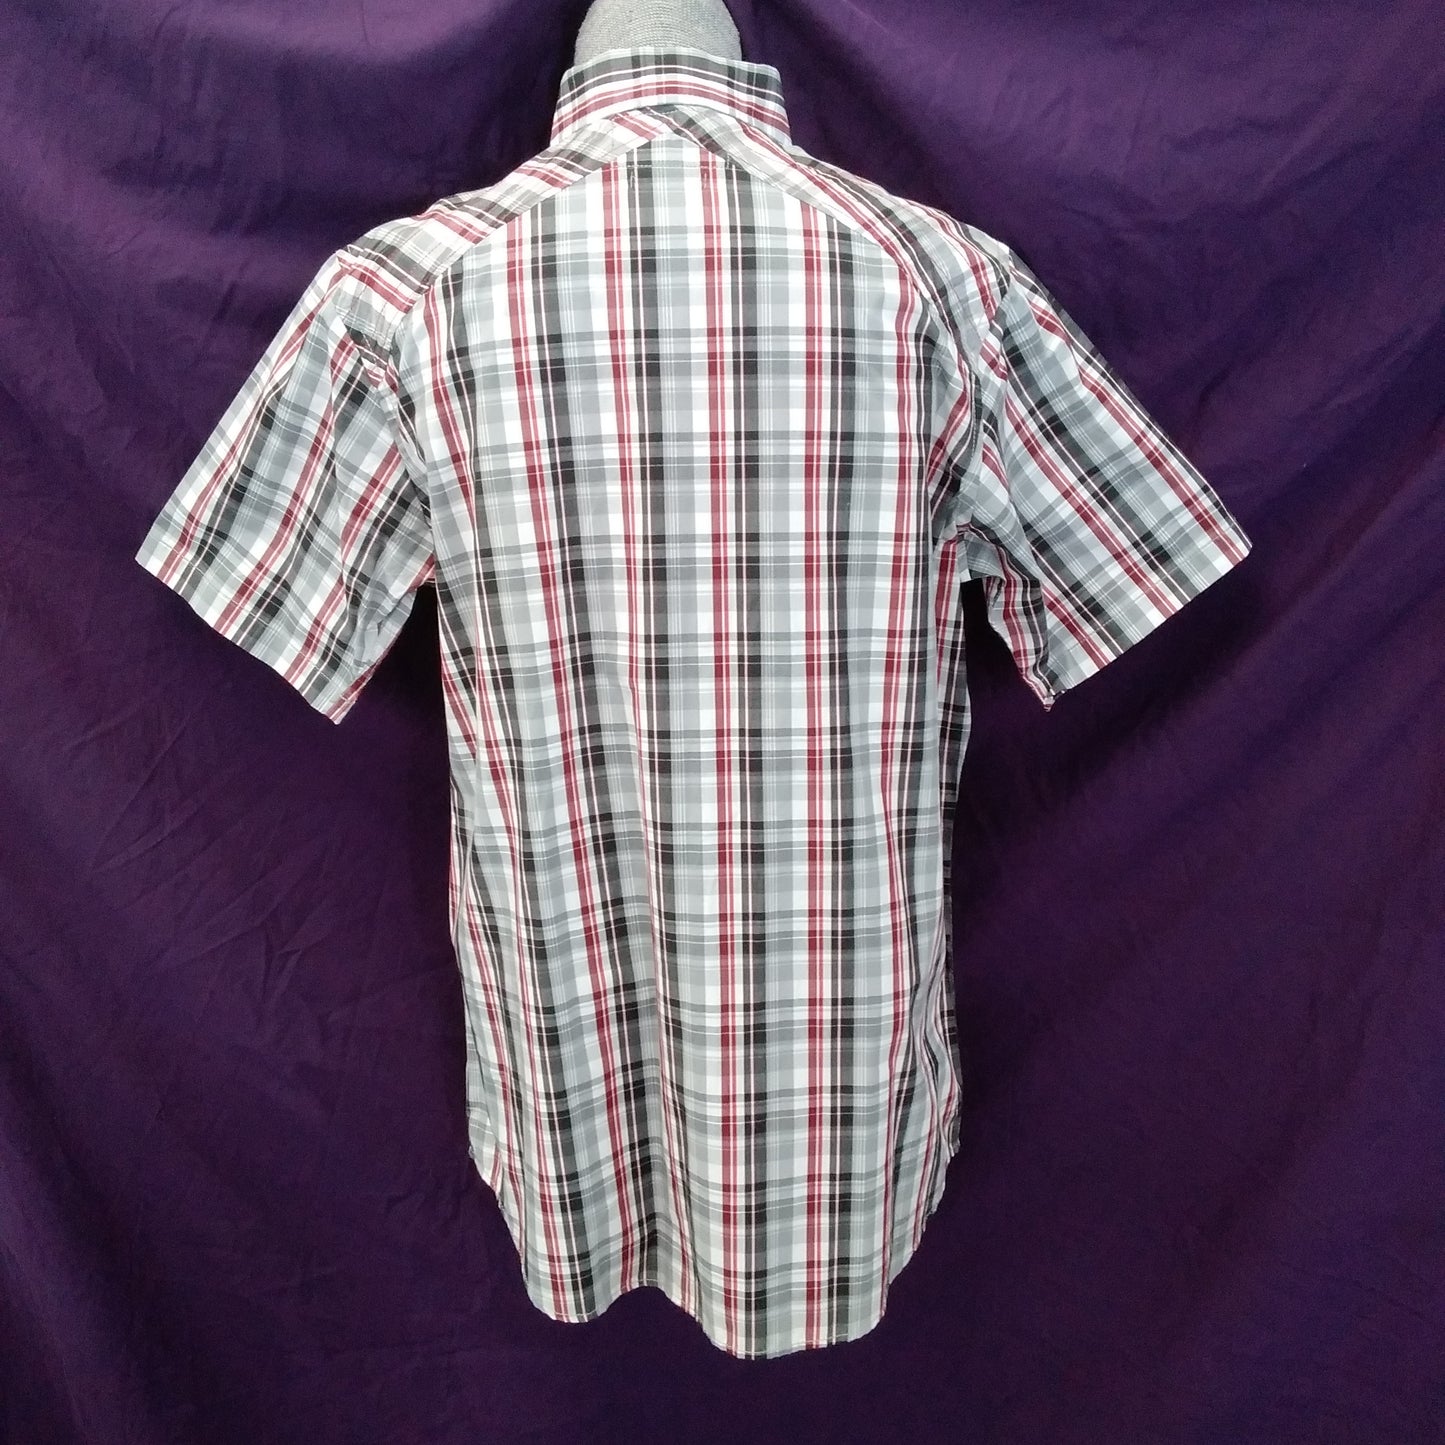 Ecko Unltd Plaid Short Sleeve Button Up Shirt - Large